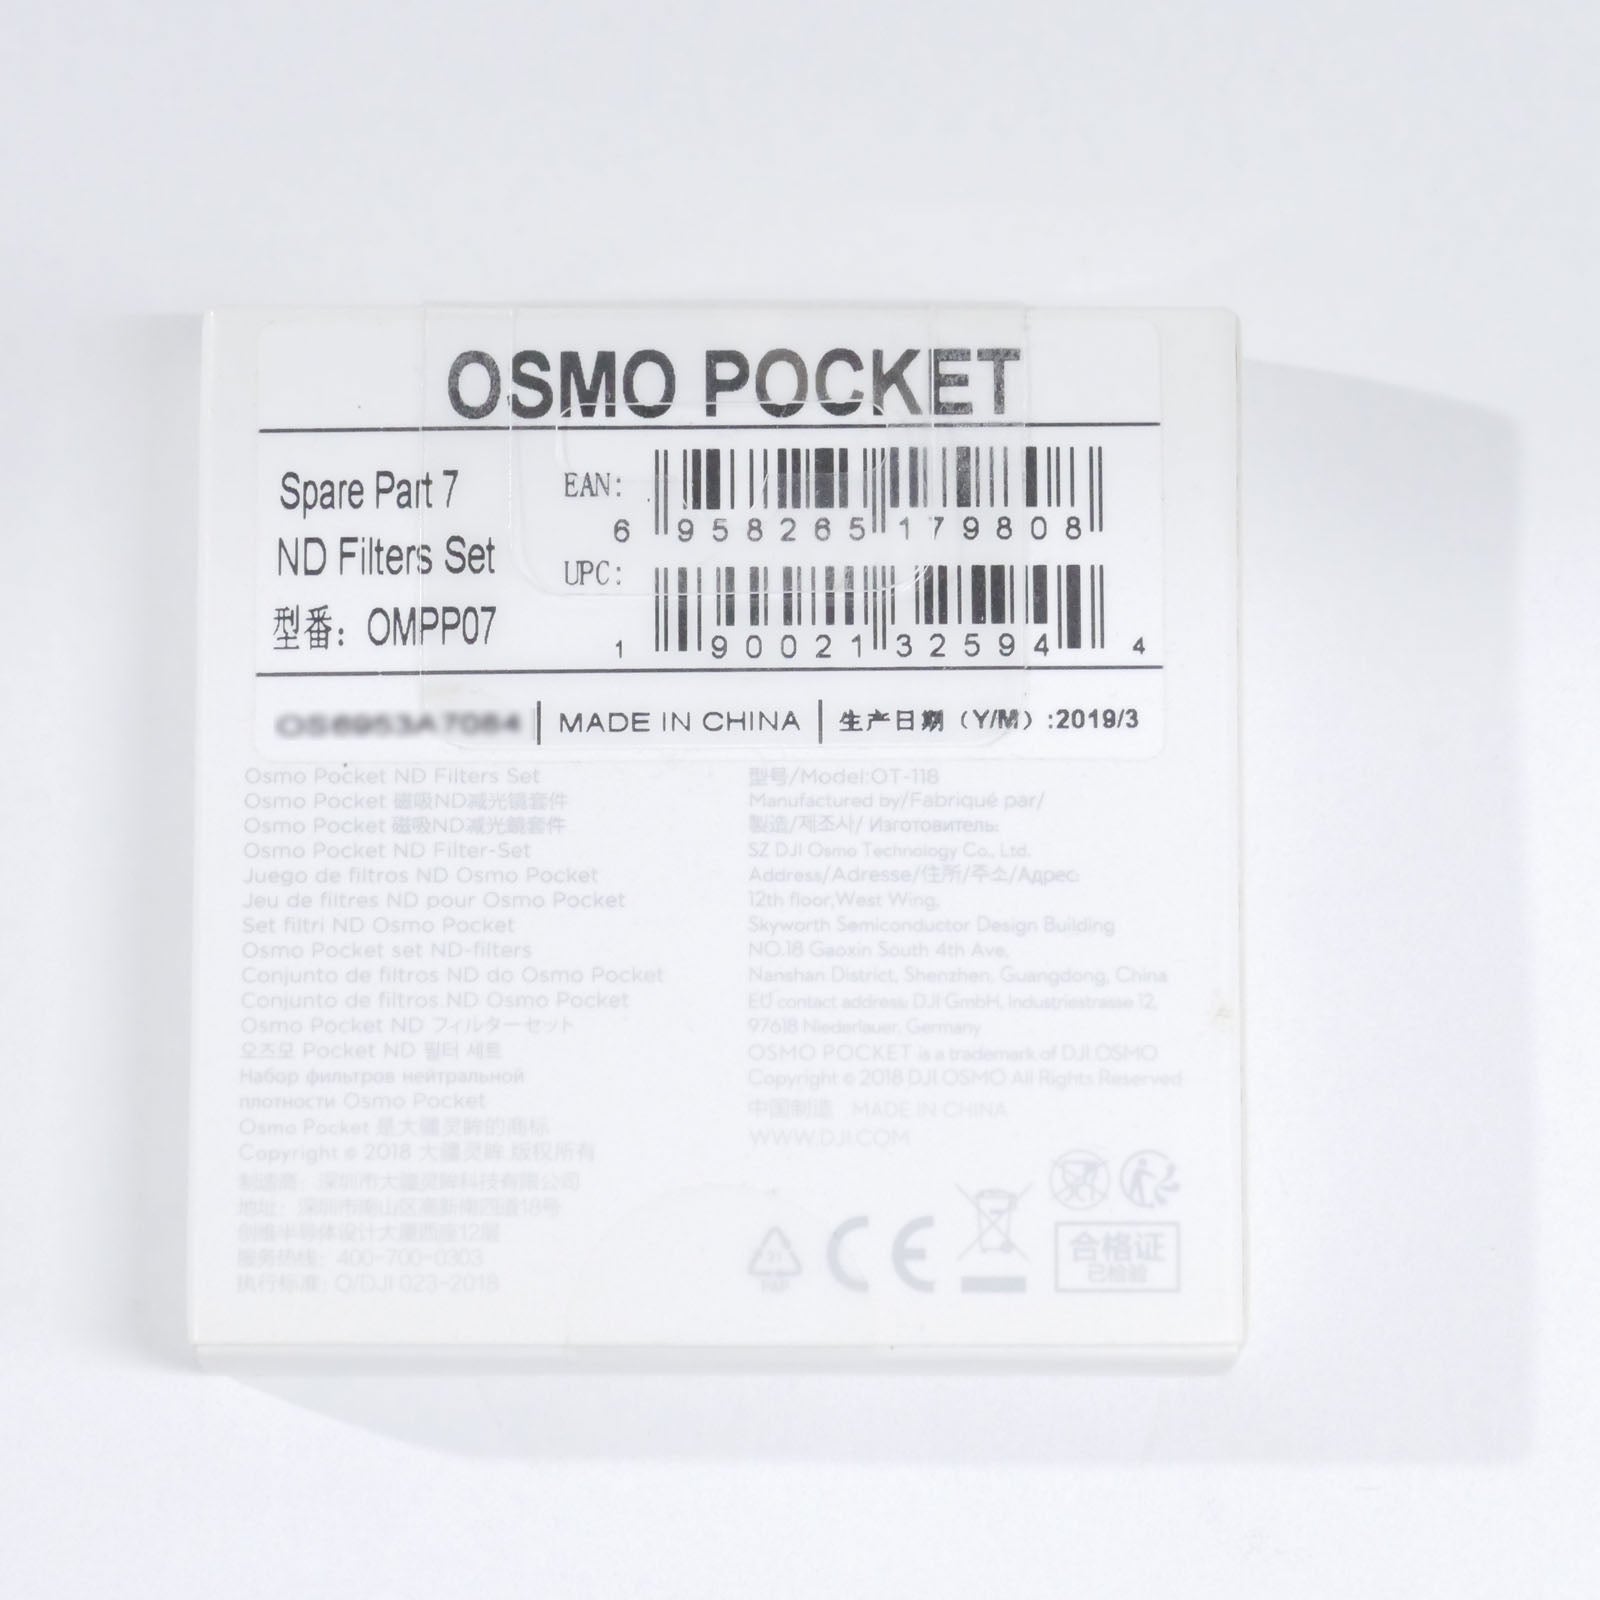 DJI(ディージェイアイ) NDフィルターセット OSMO POCKET ND FILTERS SET OMPP07 未開封品